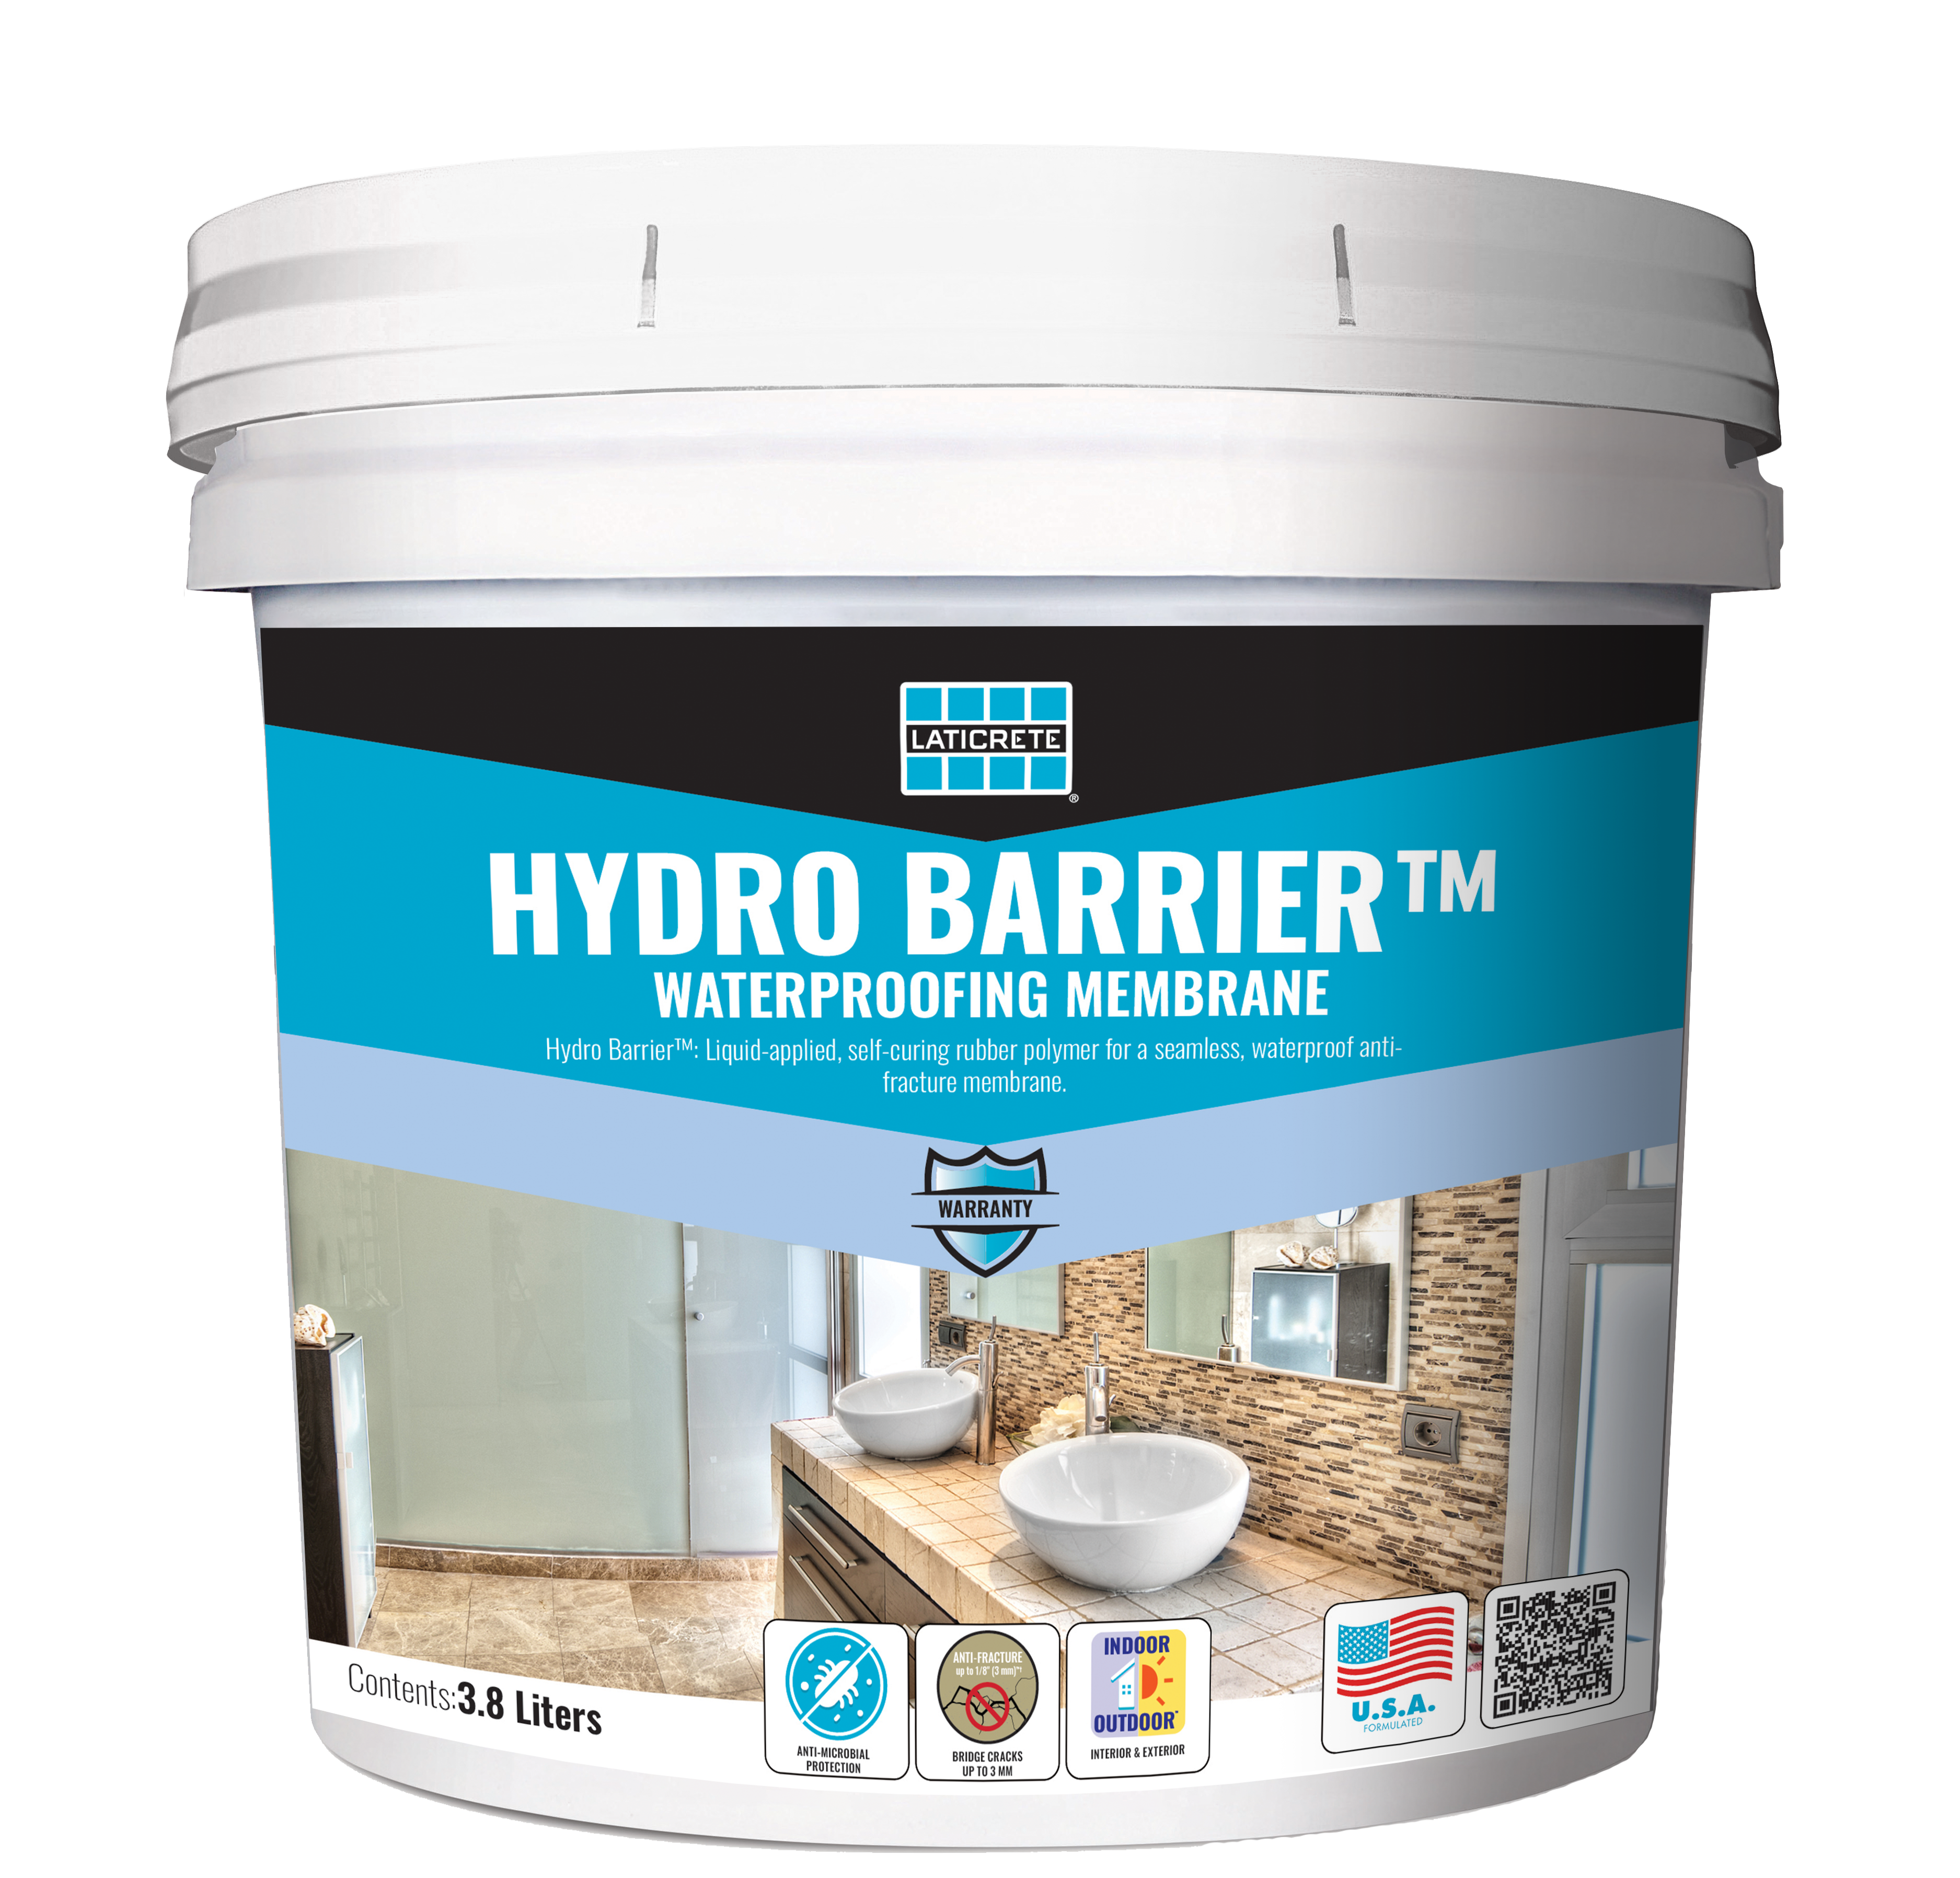 Hydro Barrier Waterproofing Membrane